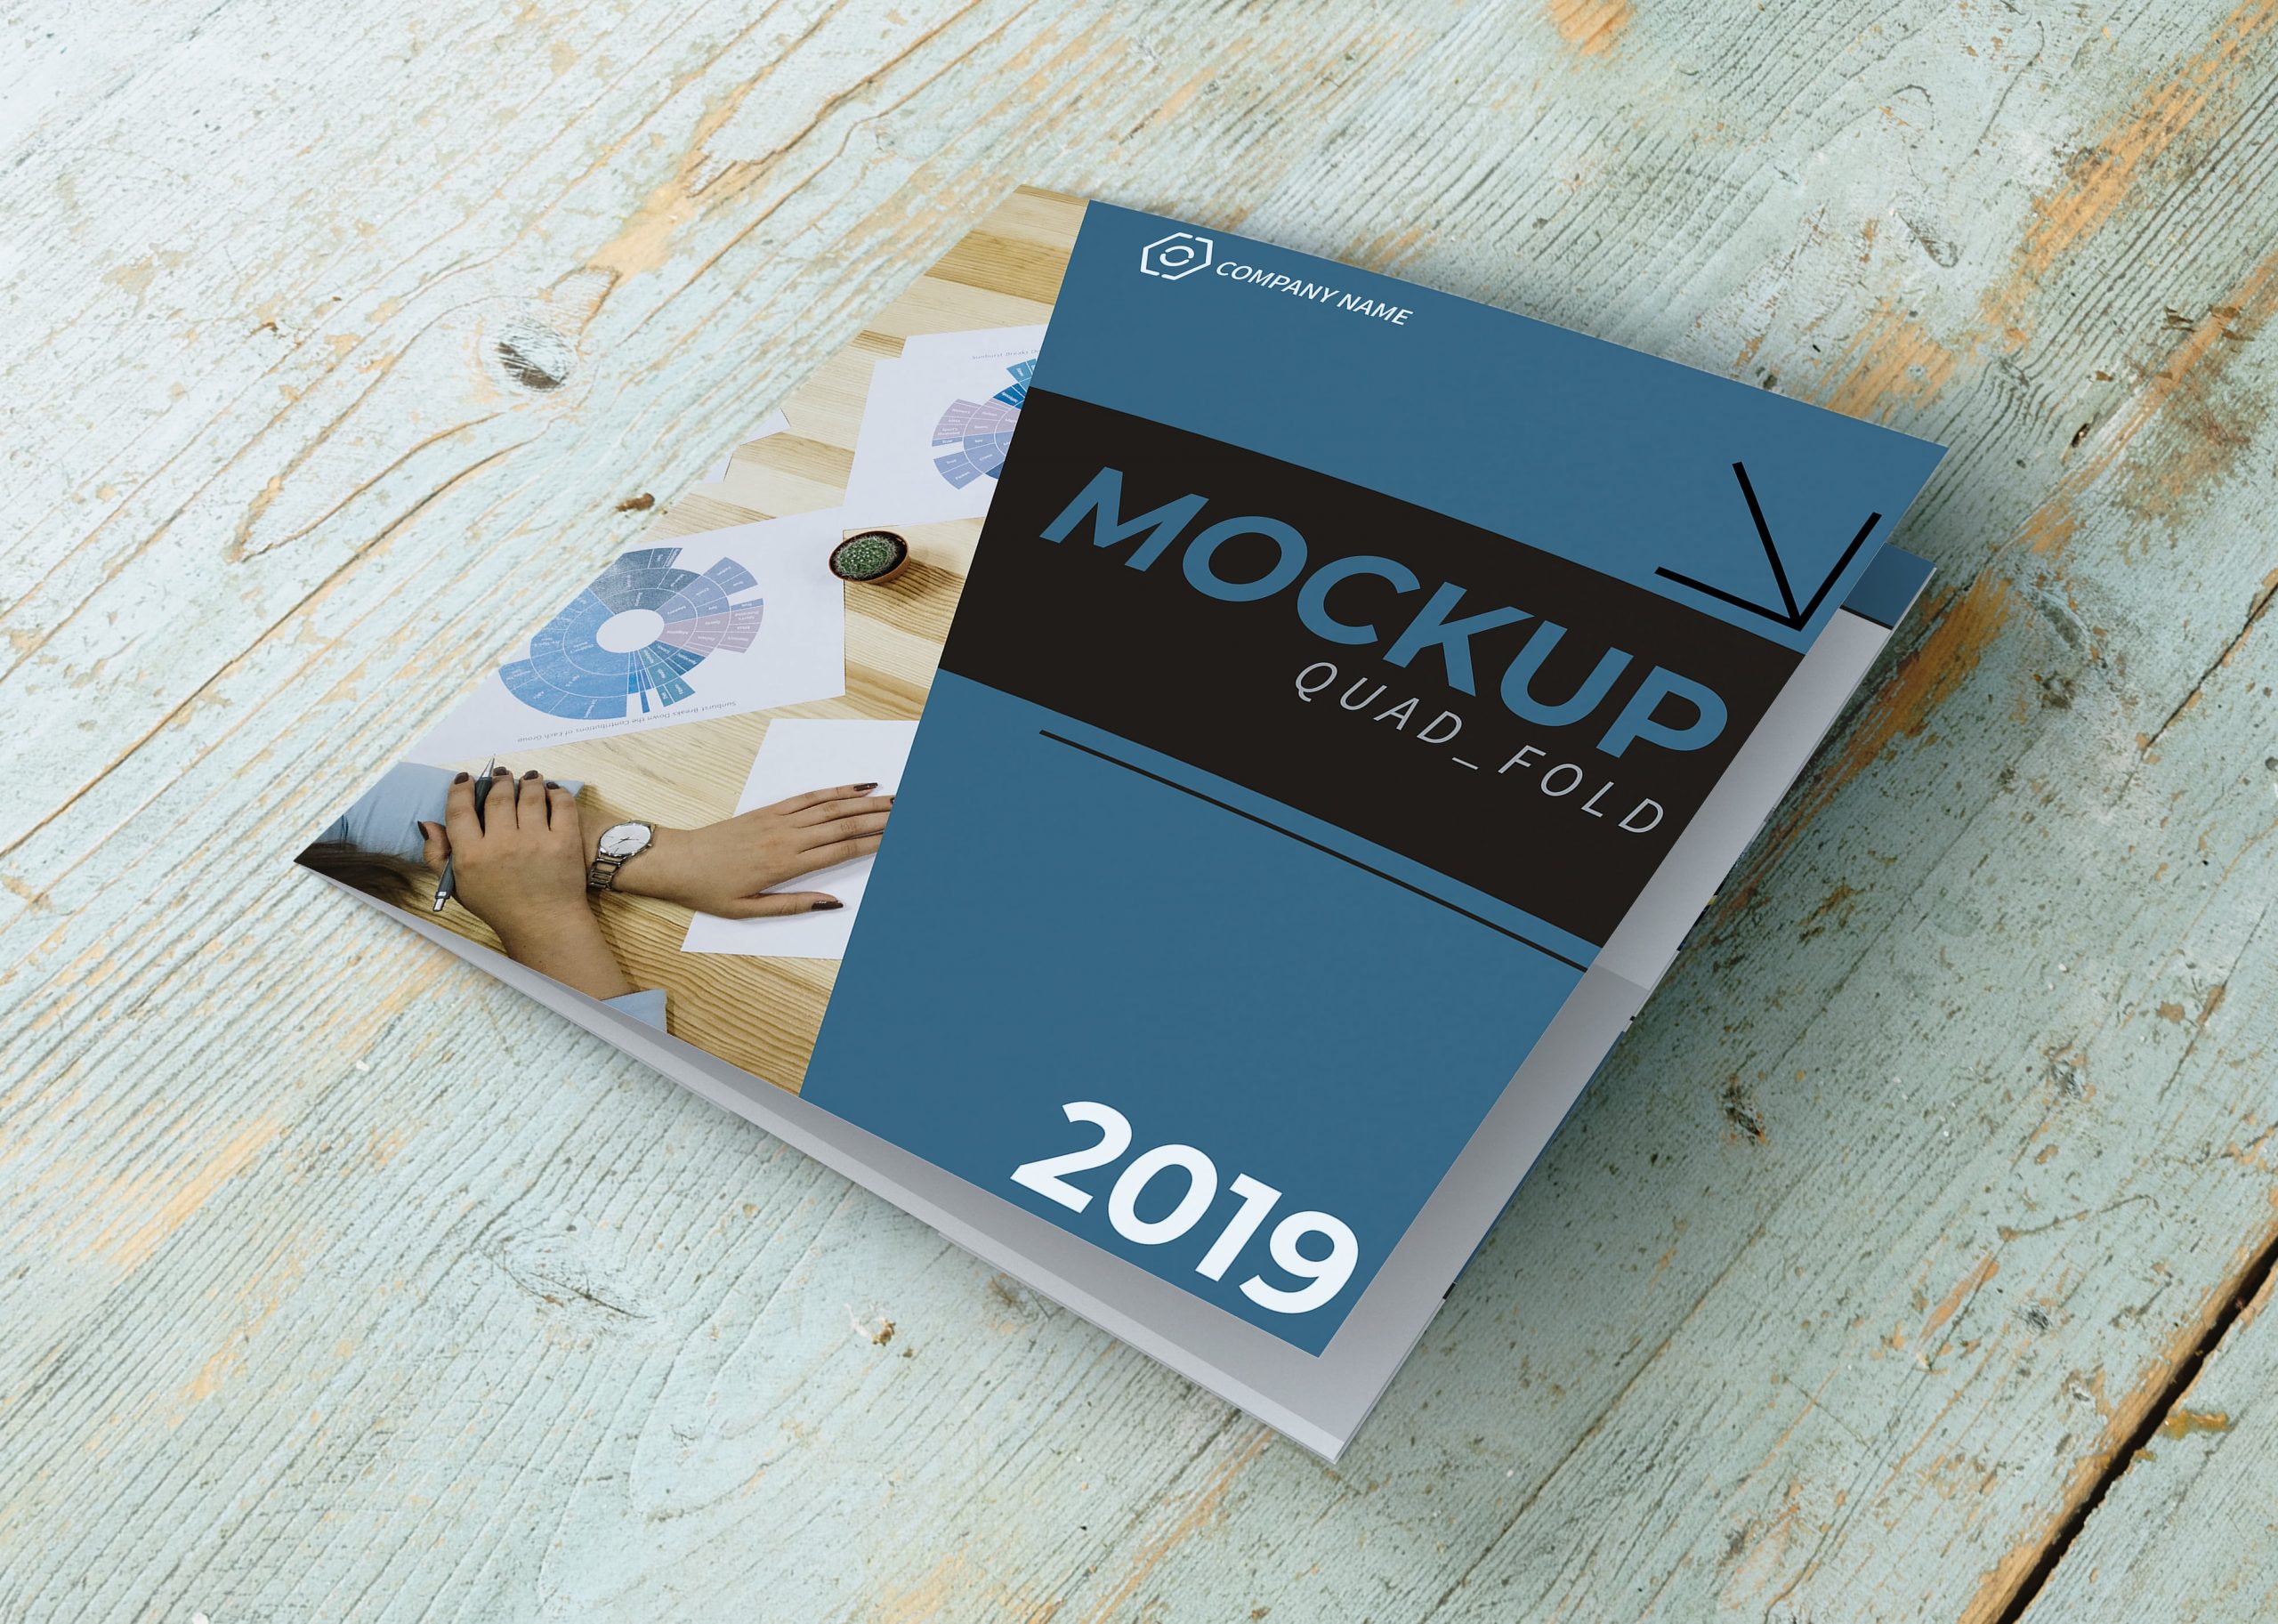 Brochure Mockup